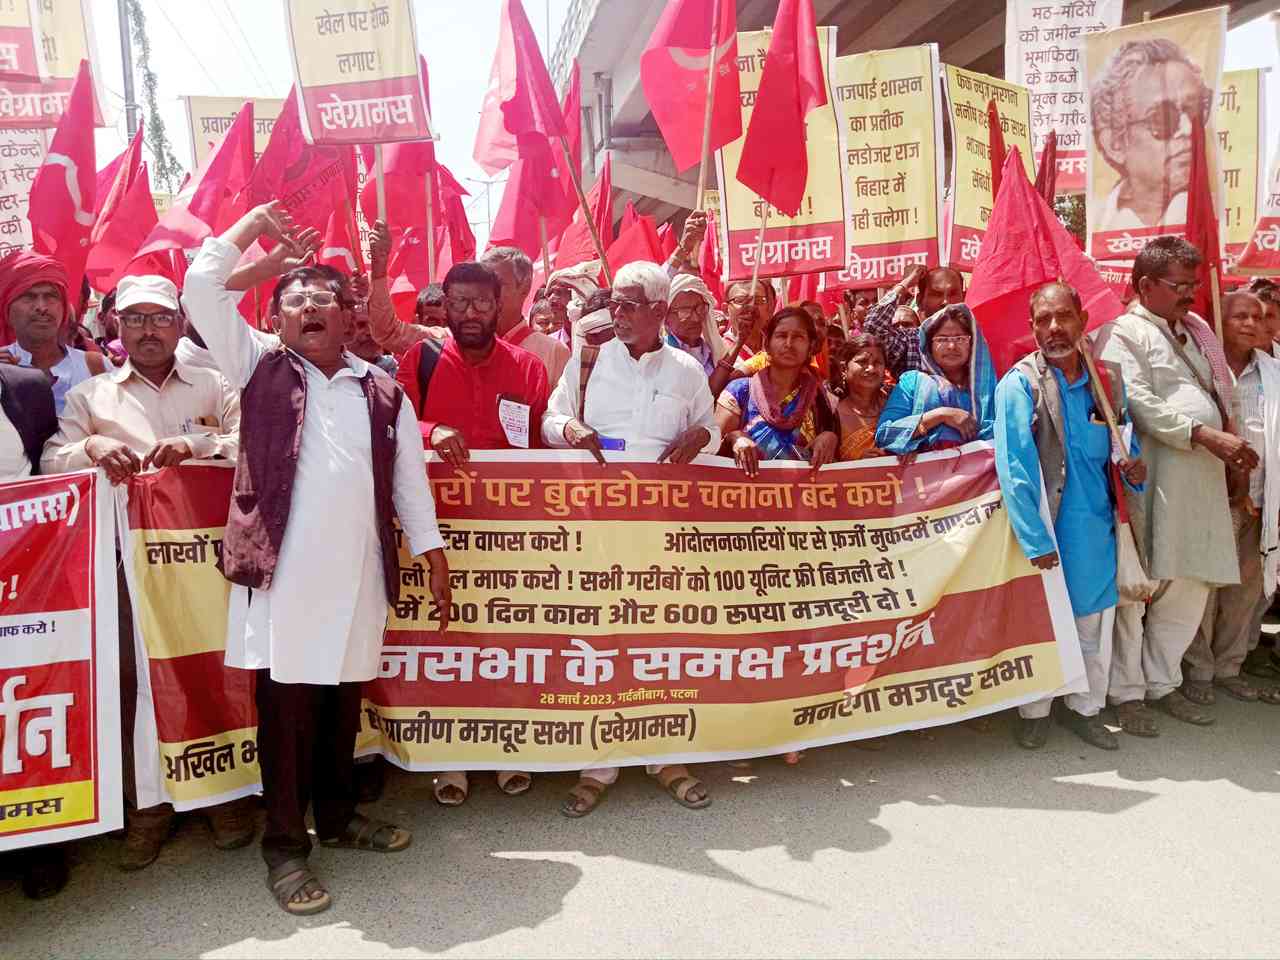 Thousands Protest in Bihar Demanding Immediate Stop on Evictions